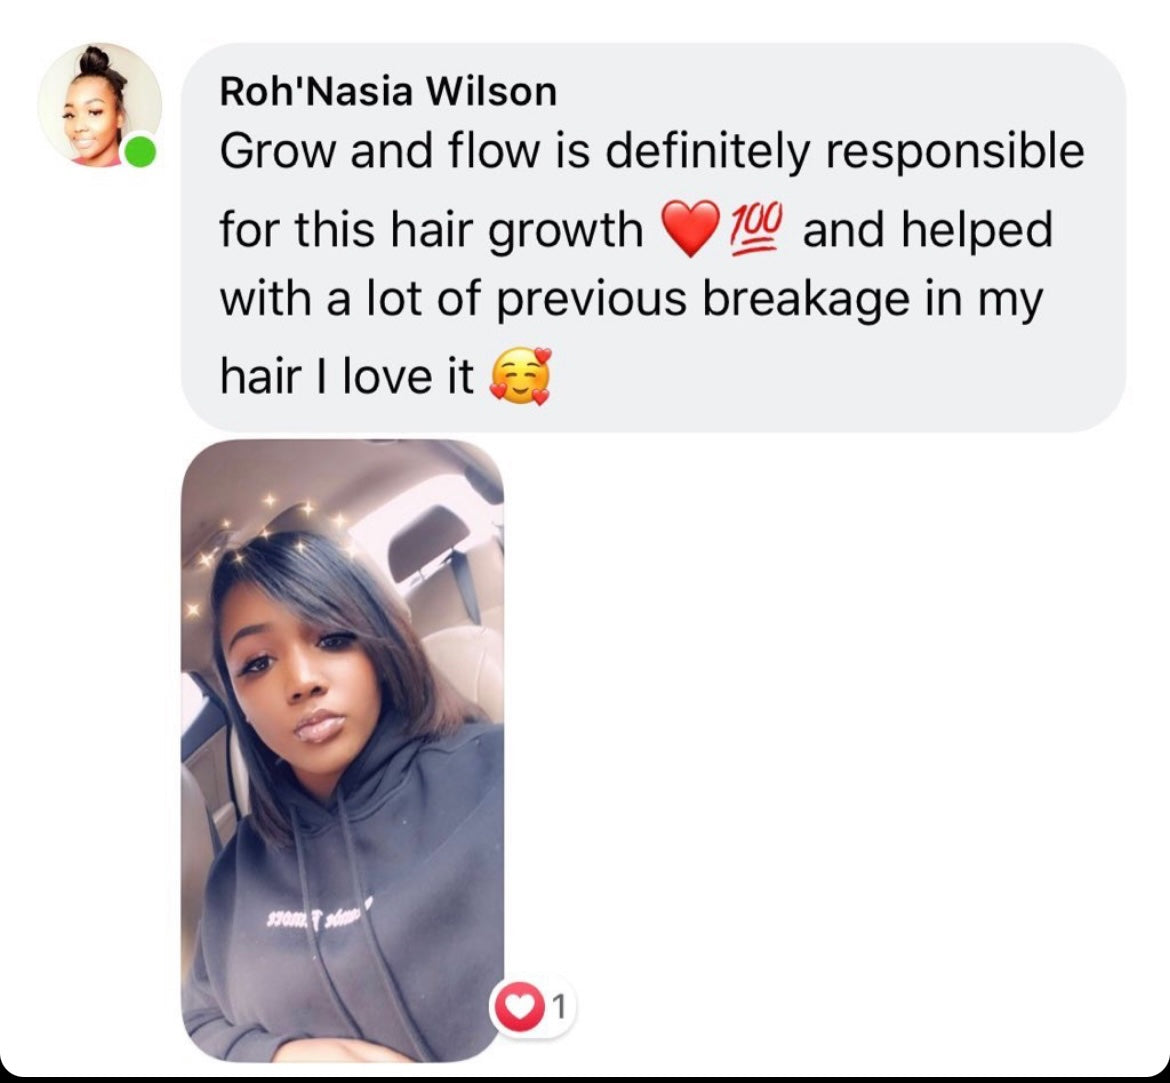 Grow & Flow Nourishing Hair Growth Oil